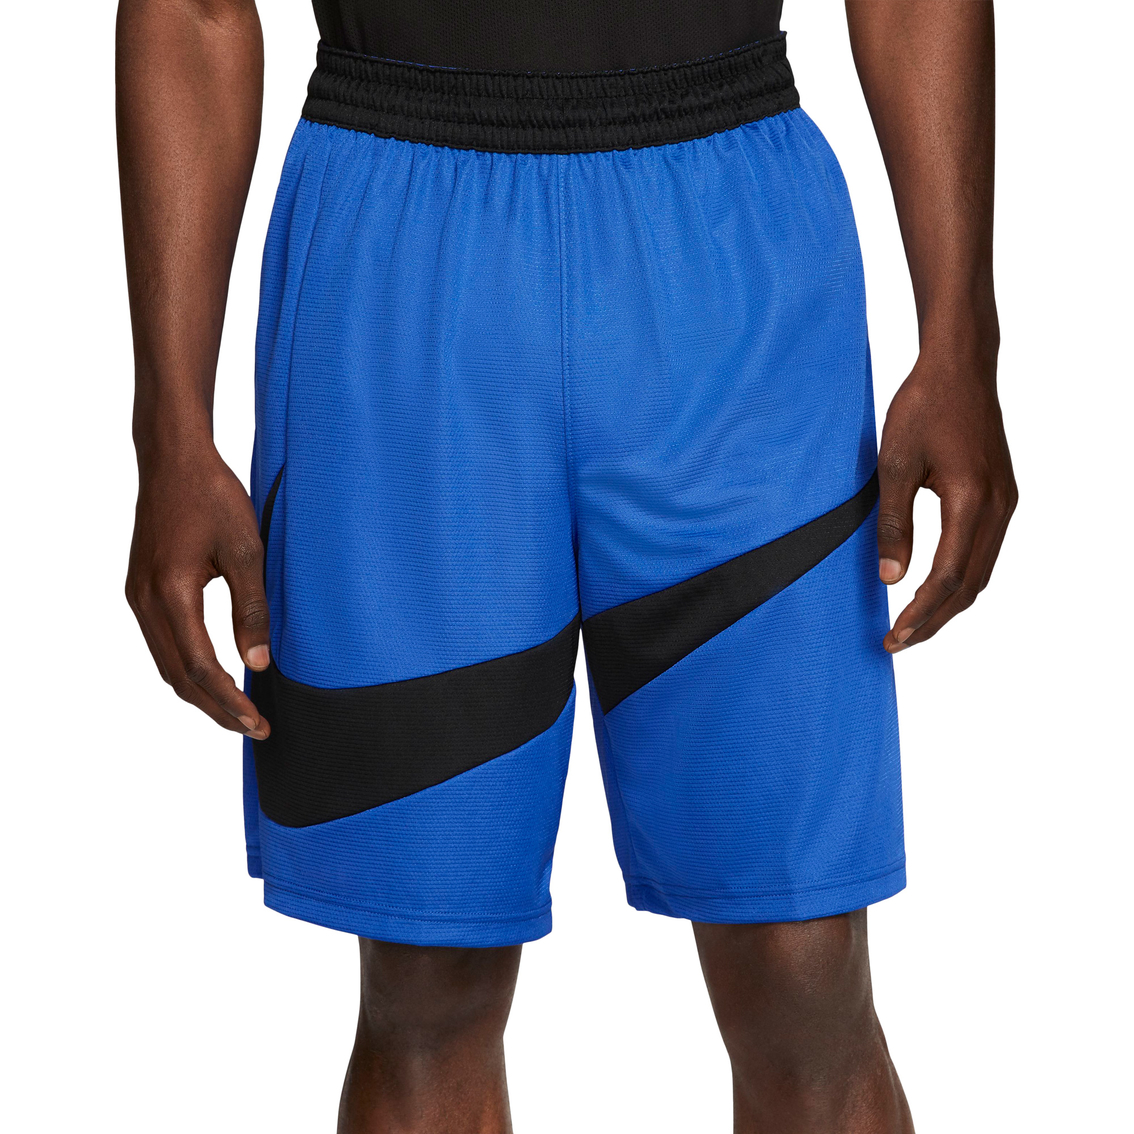 Nike Dri-fit Hbr 2.0 Basketball Shorts | Shorts | Clothing ...